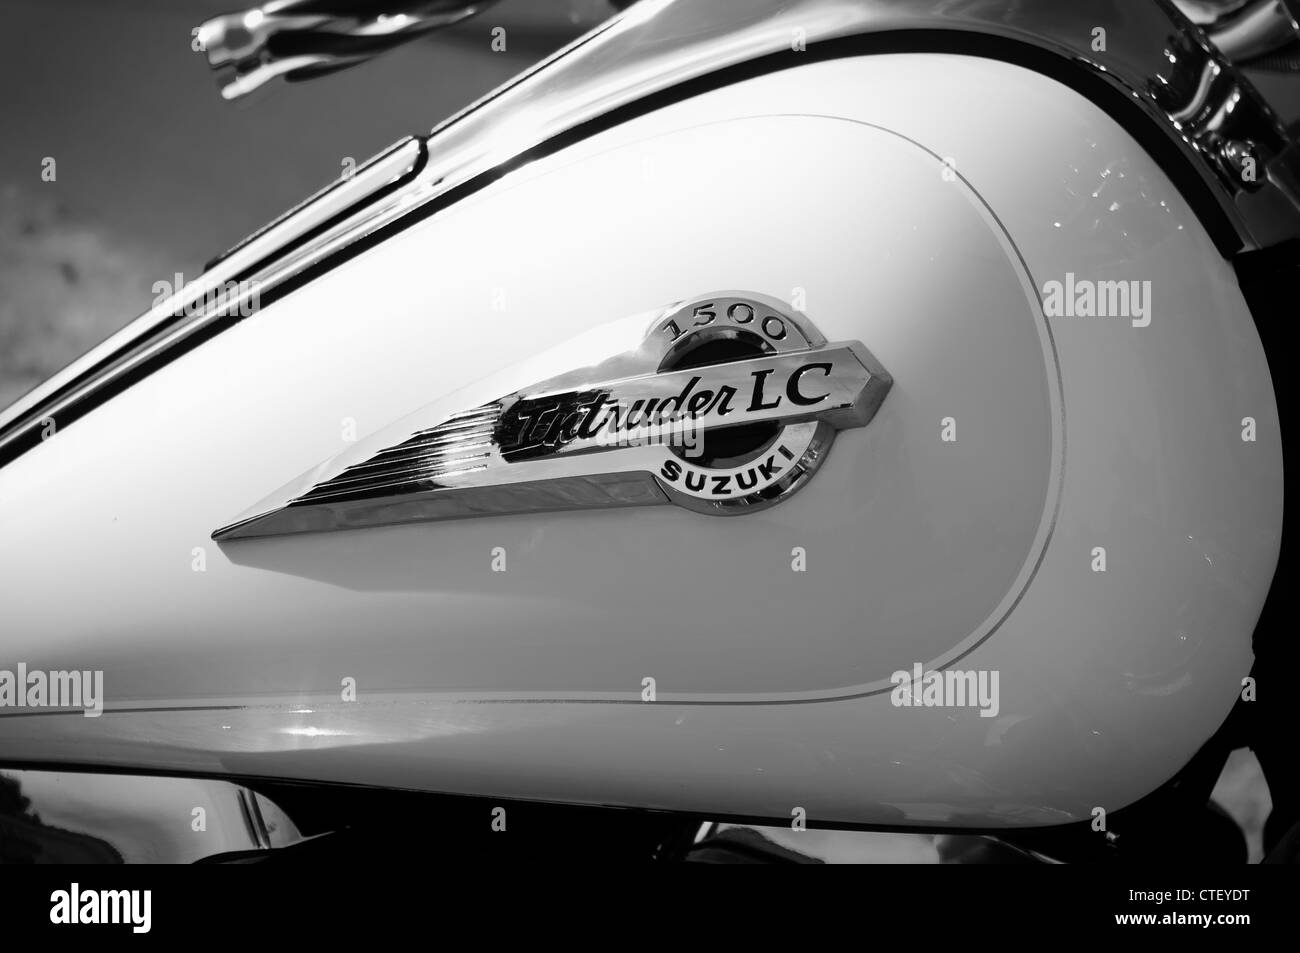 Motociclo Suzuki Intruder C1500, frammento (bianco e nero) Foto Stock